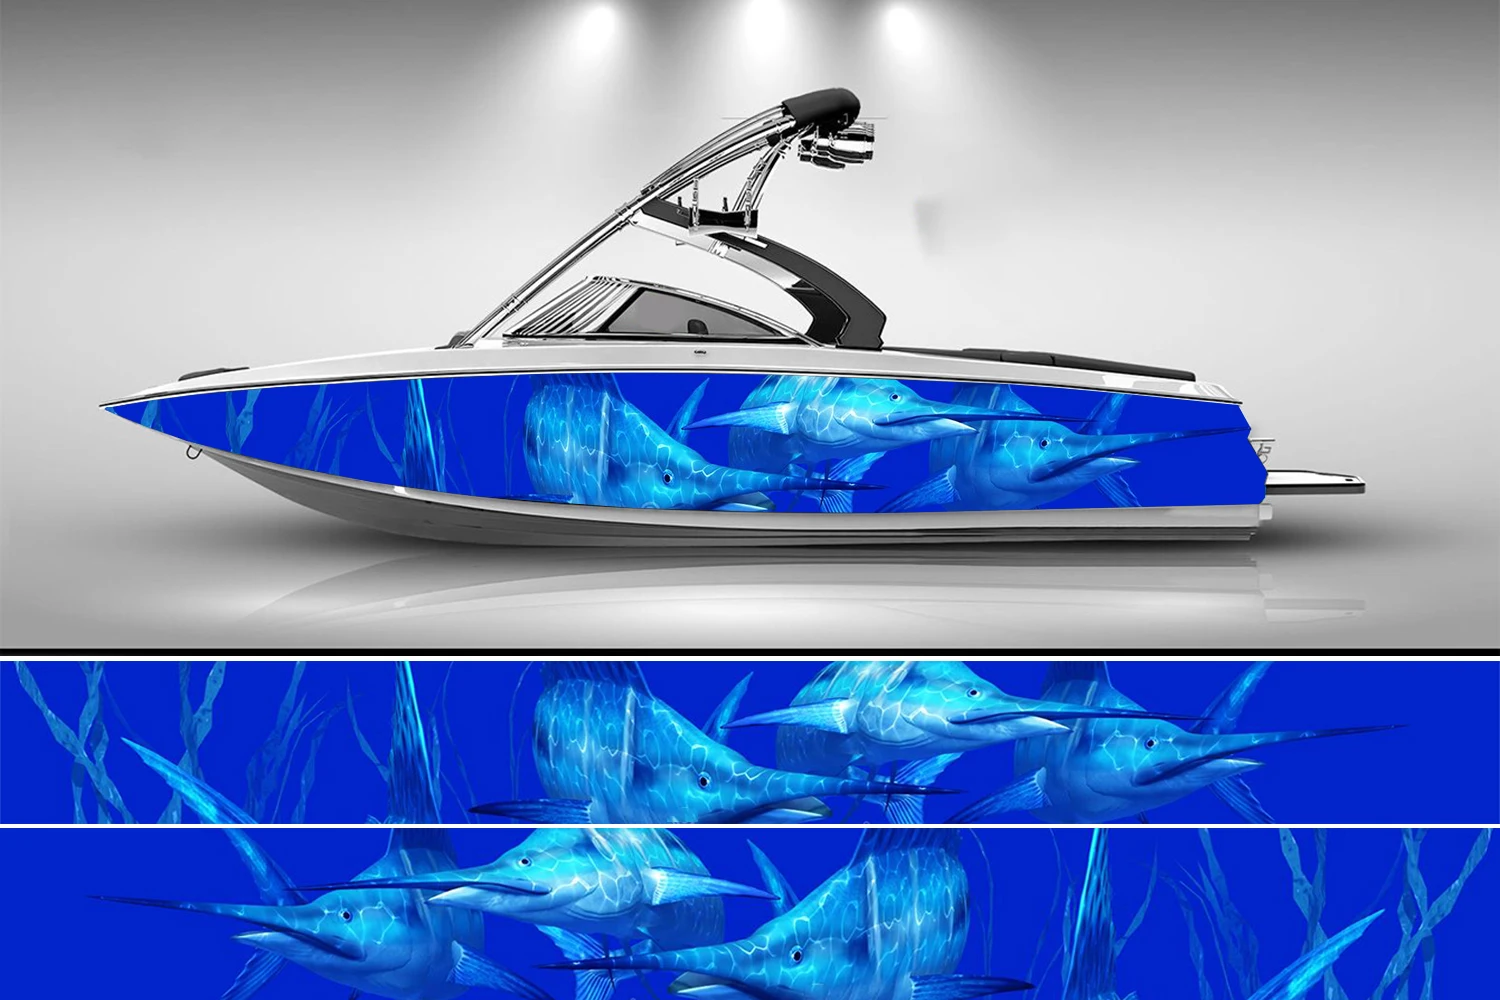 наклейка на лодку marlin, модная изготовленная на заказ наклейка на рыбную лодку, виниловая водонепроницаемая наклейка на лодку, графическая наклейка на лодку